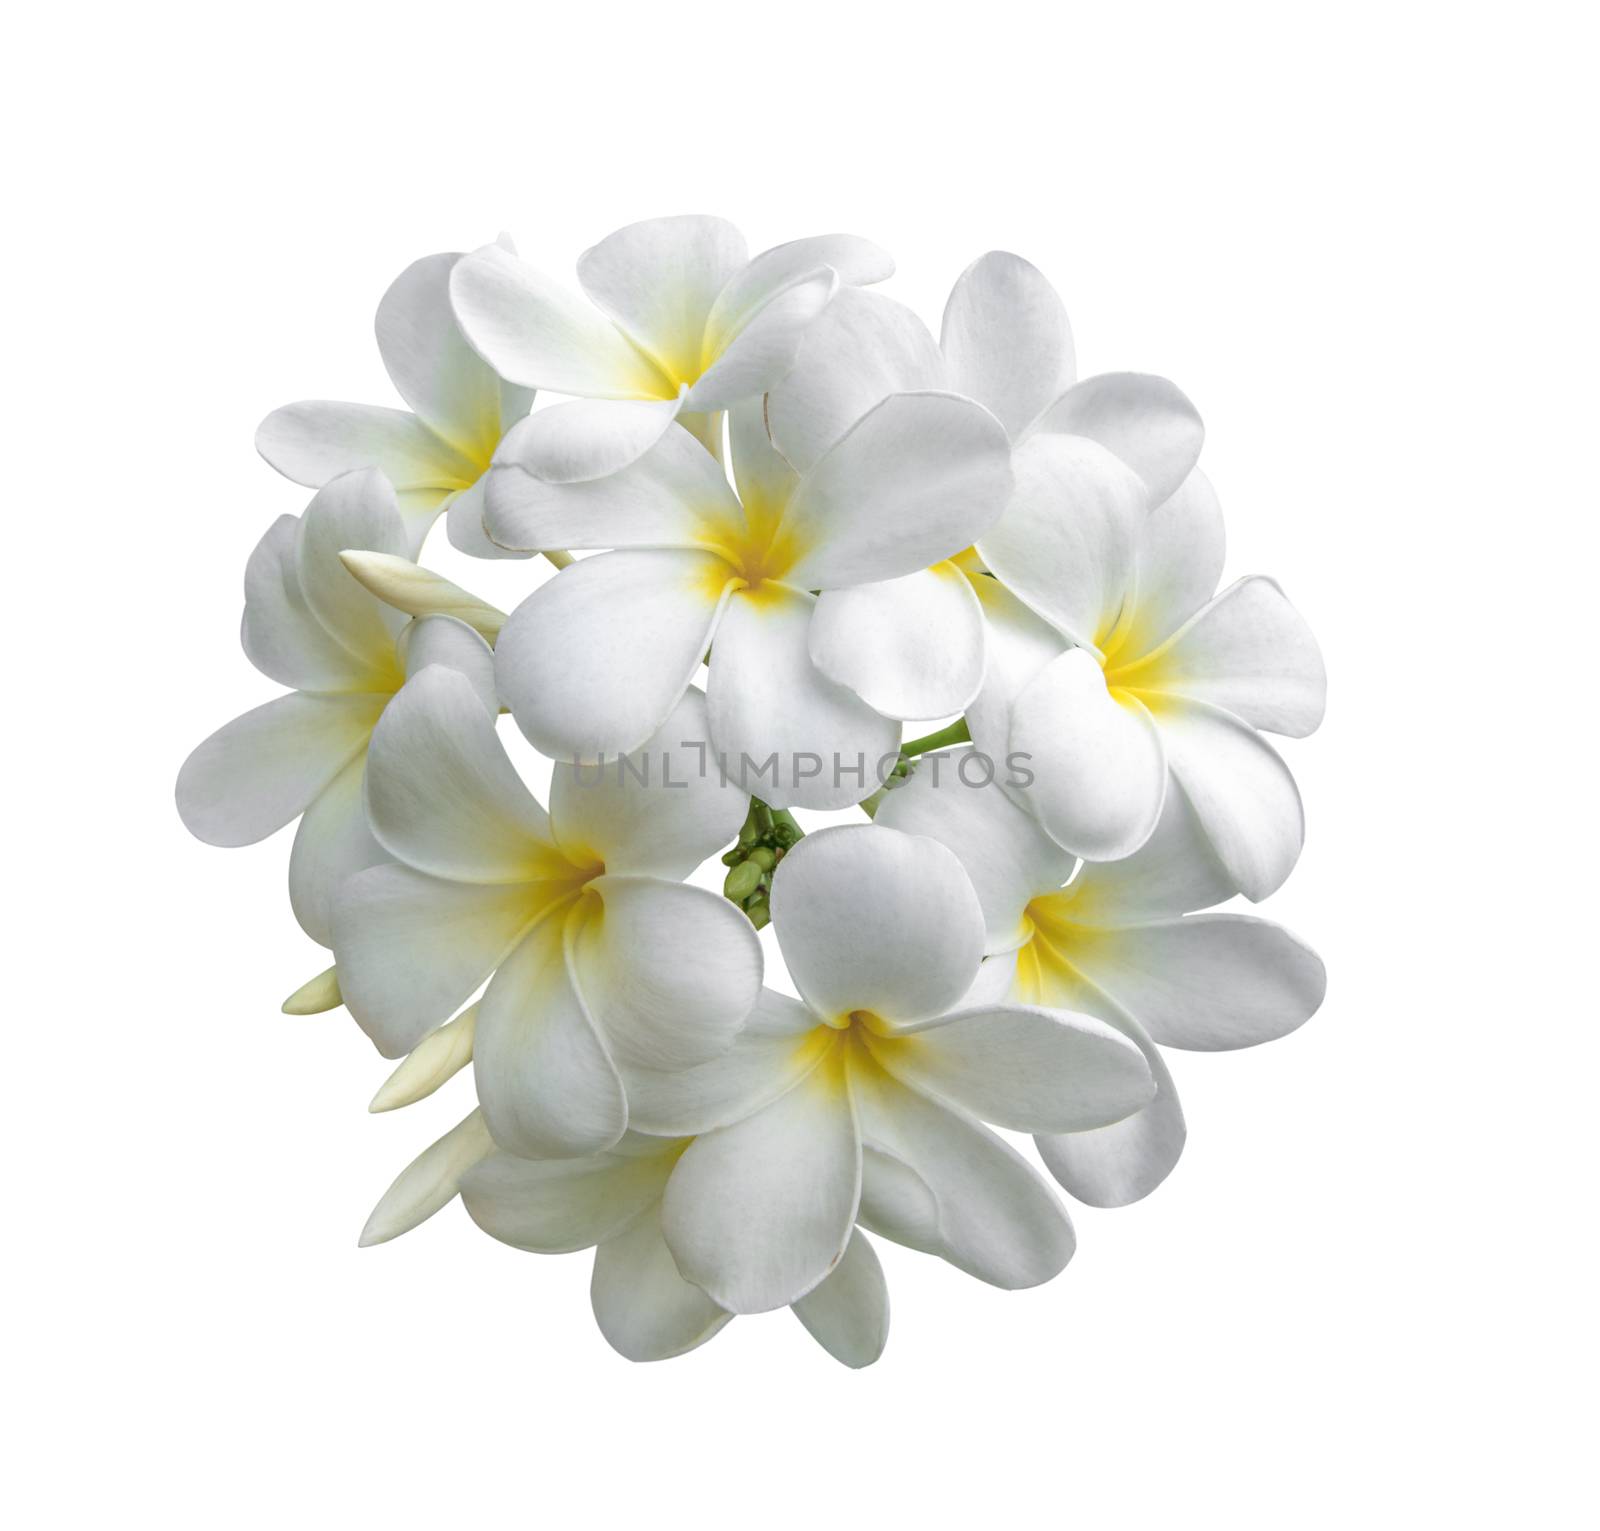 Tropical flowers frangipani (plumeria) isolated on white backgro by sommai